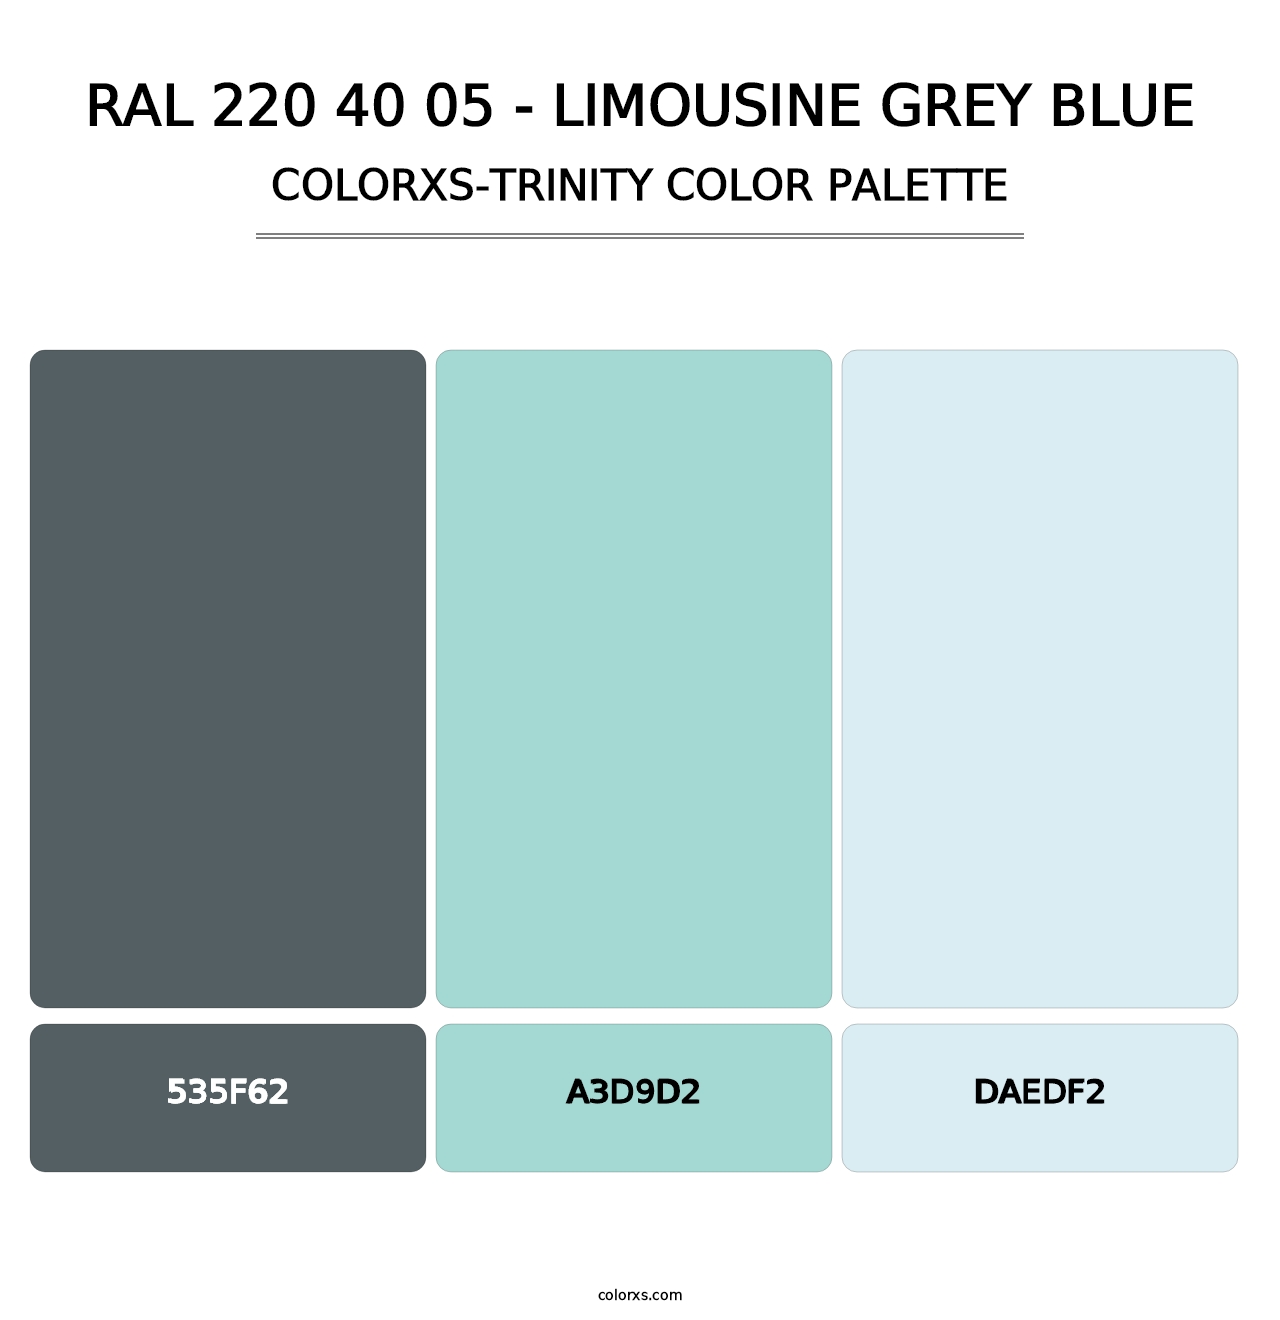 RAL 220 40 05 - Limousine Grey Blue - Colorxs Trinity Palette